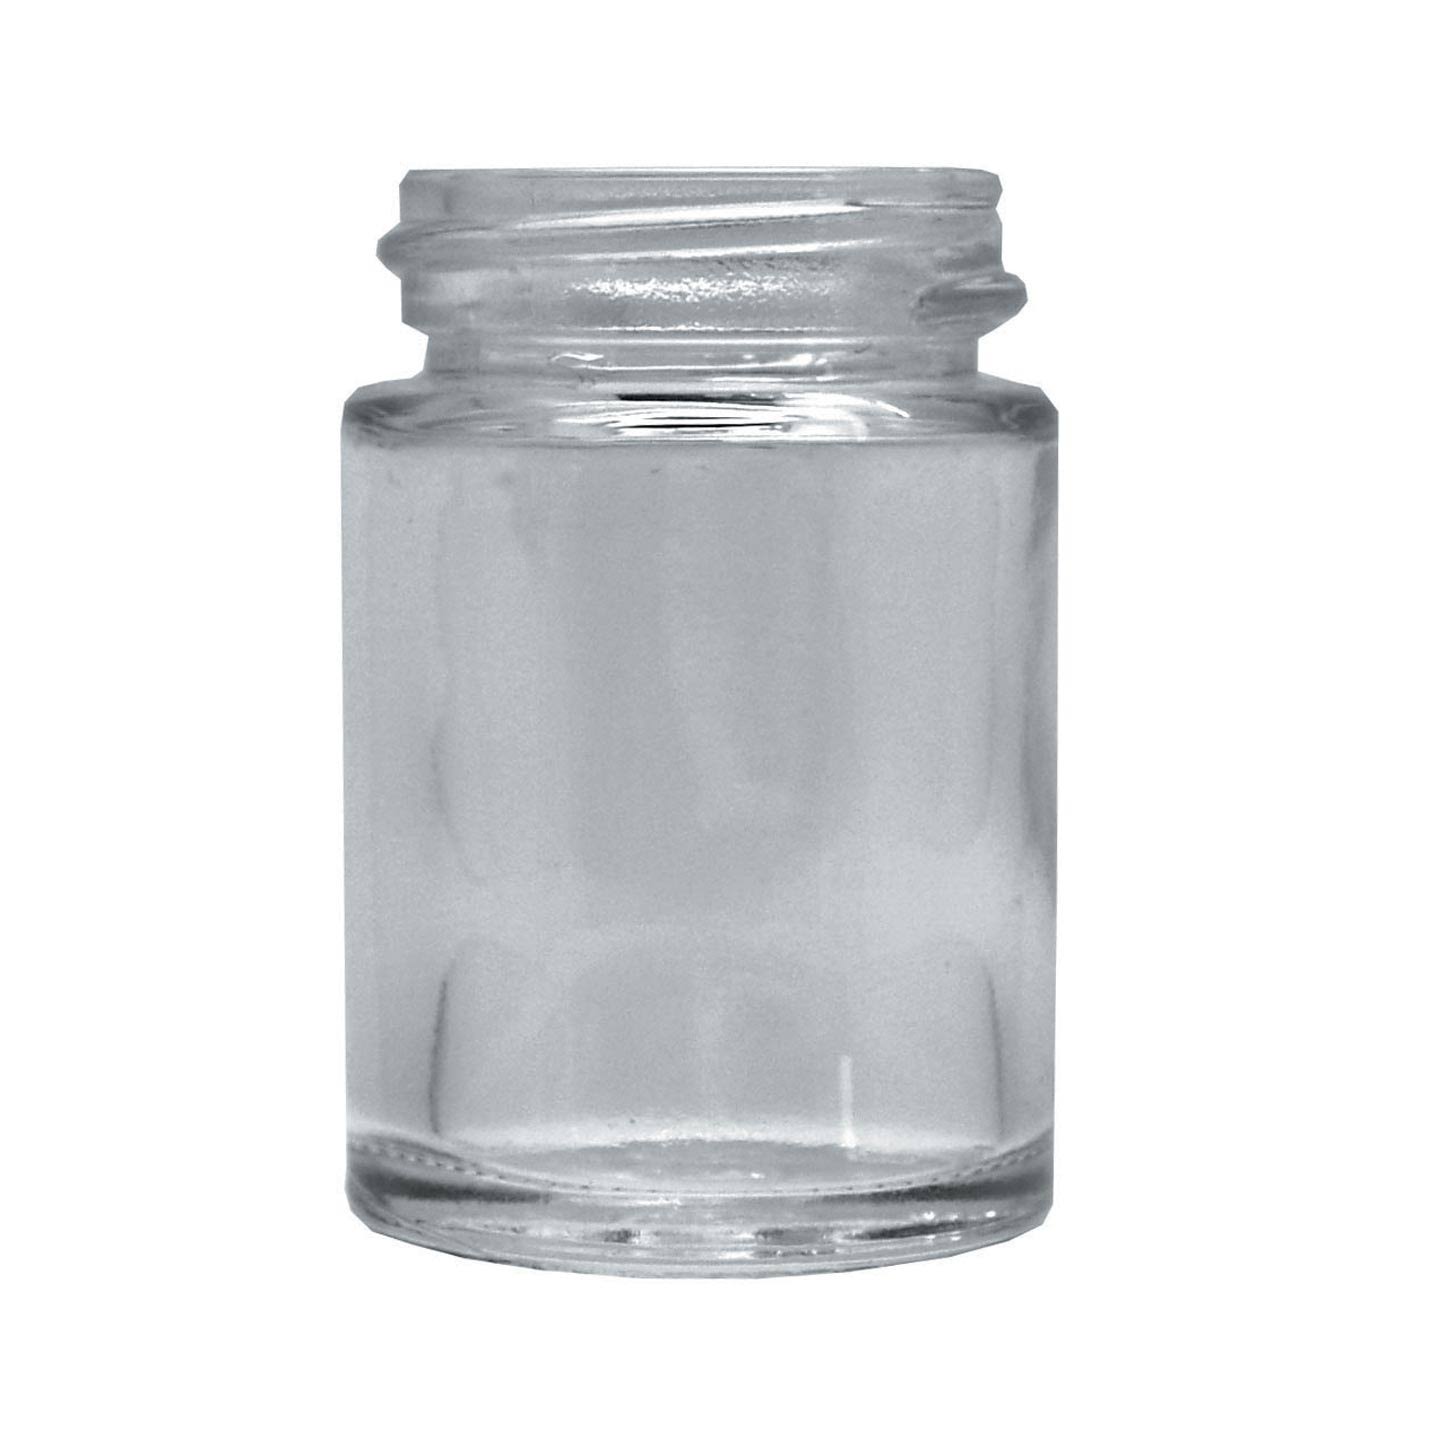 Paasche Bottle For H 191 Glass, STD